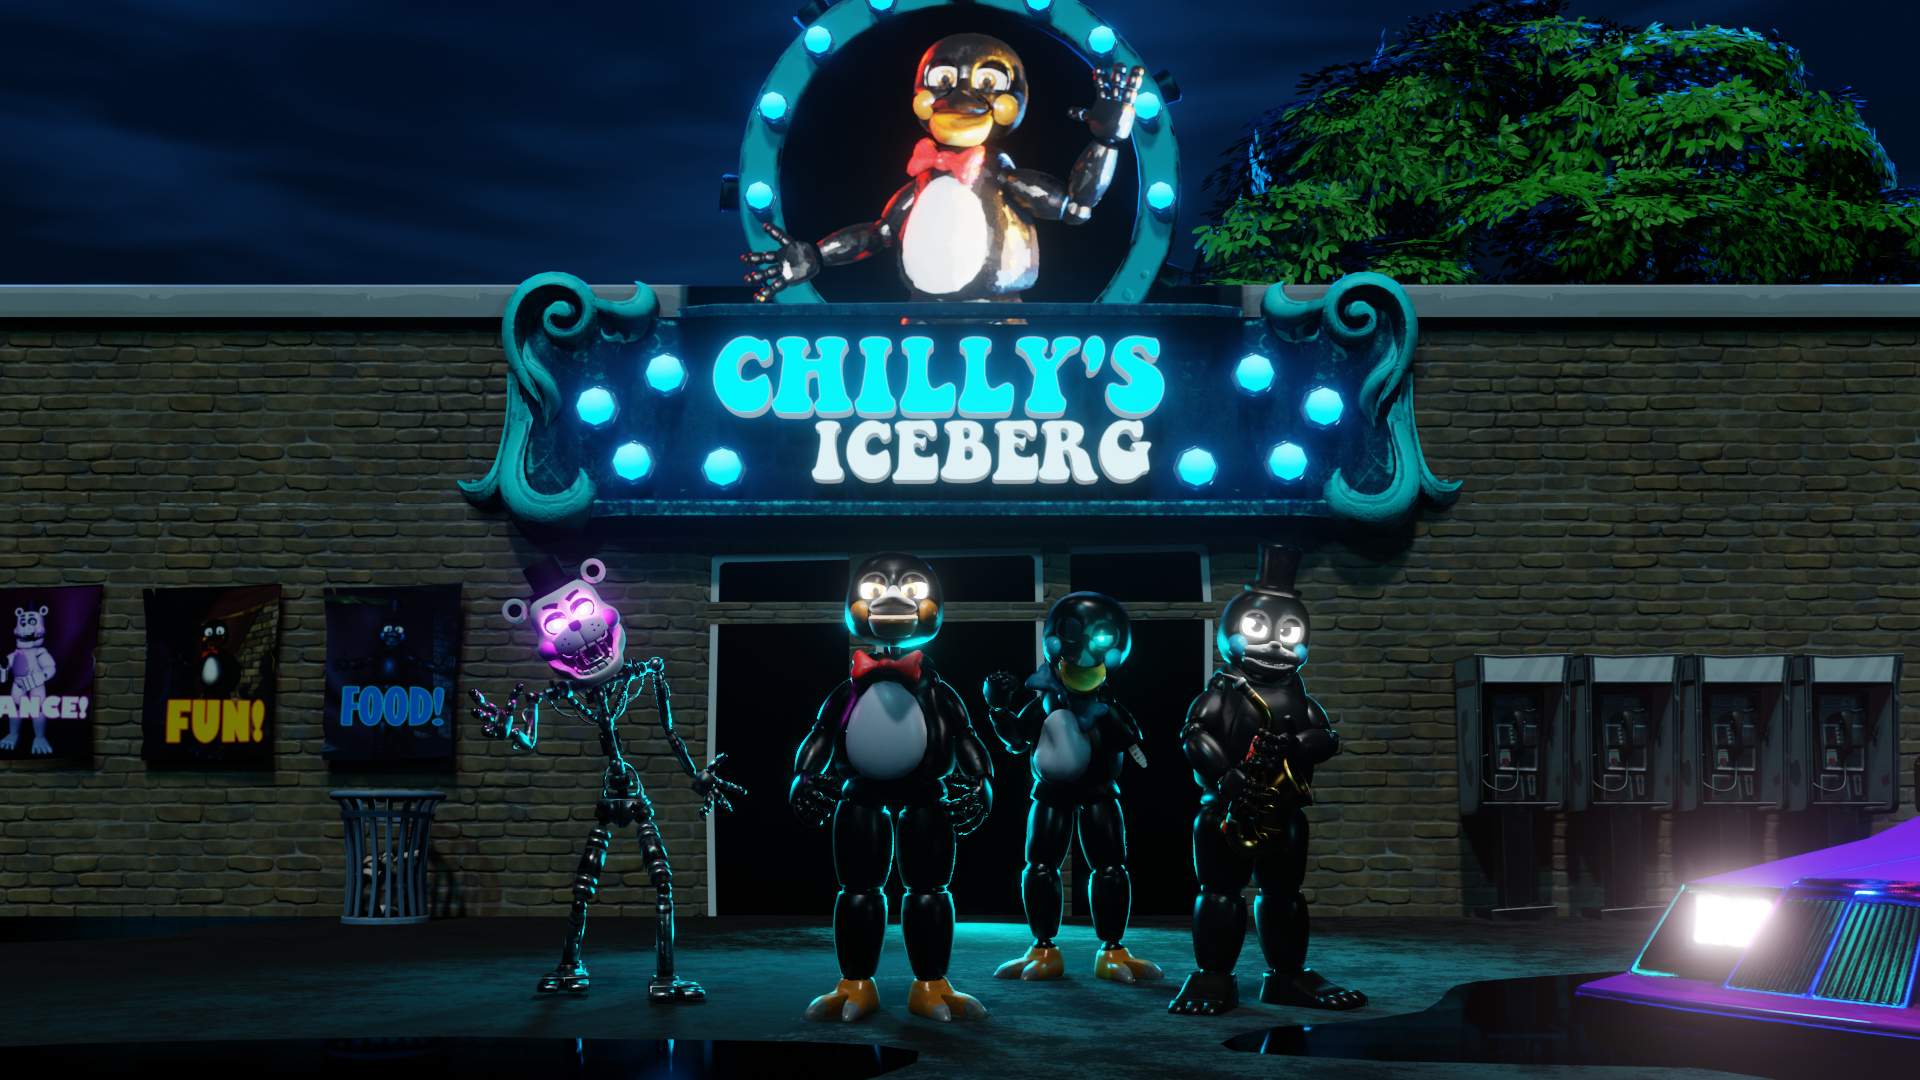 CHILLY'S ICEBERG - THE NIGHT SHIFT